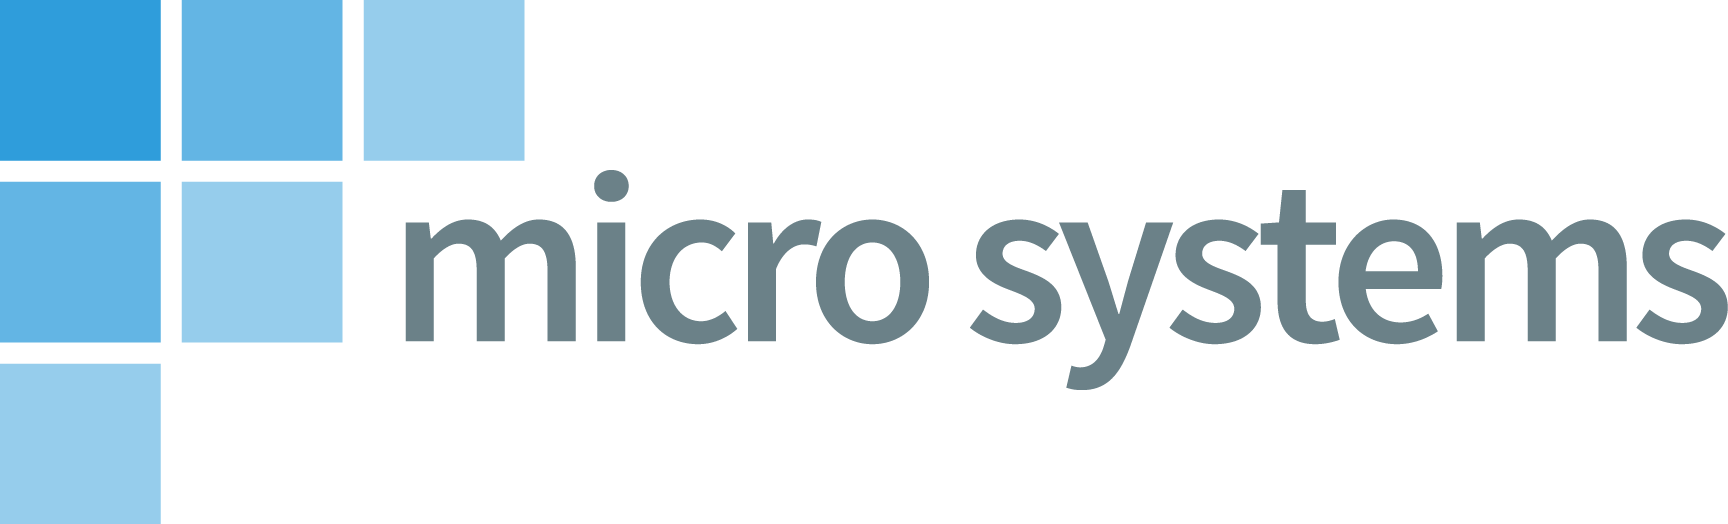 microsystems horizontal color